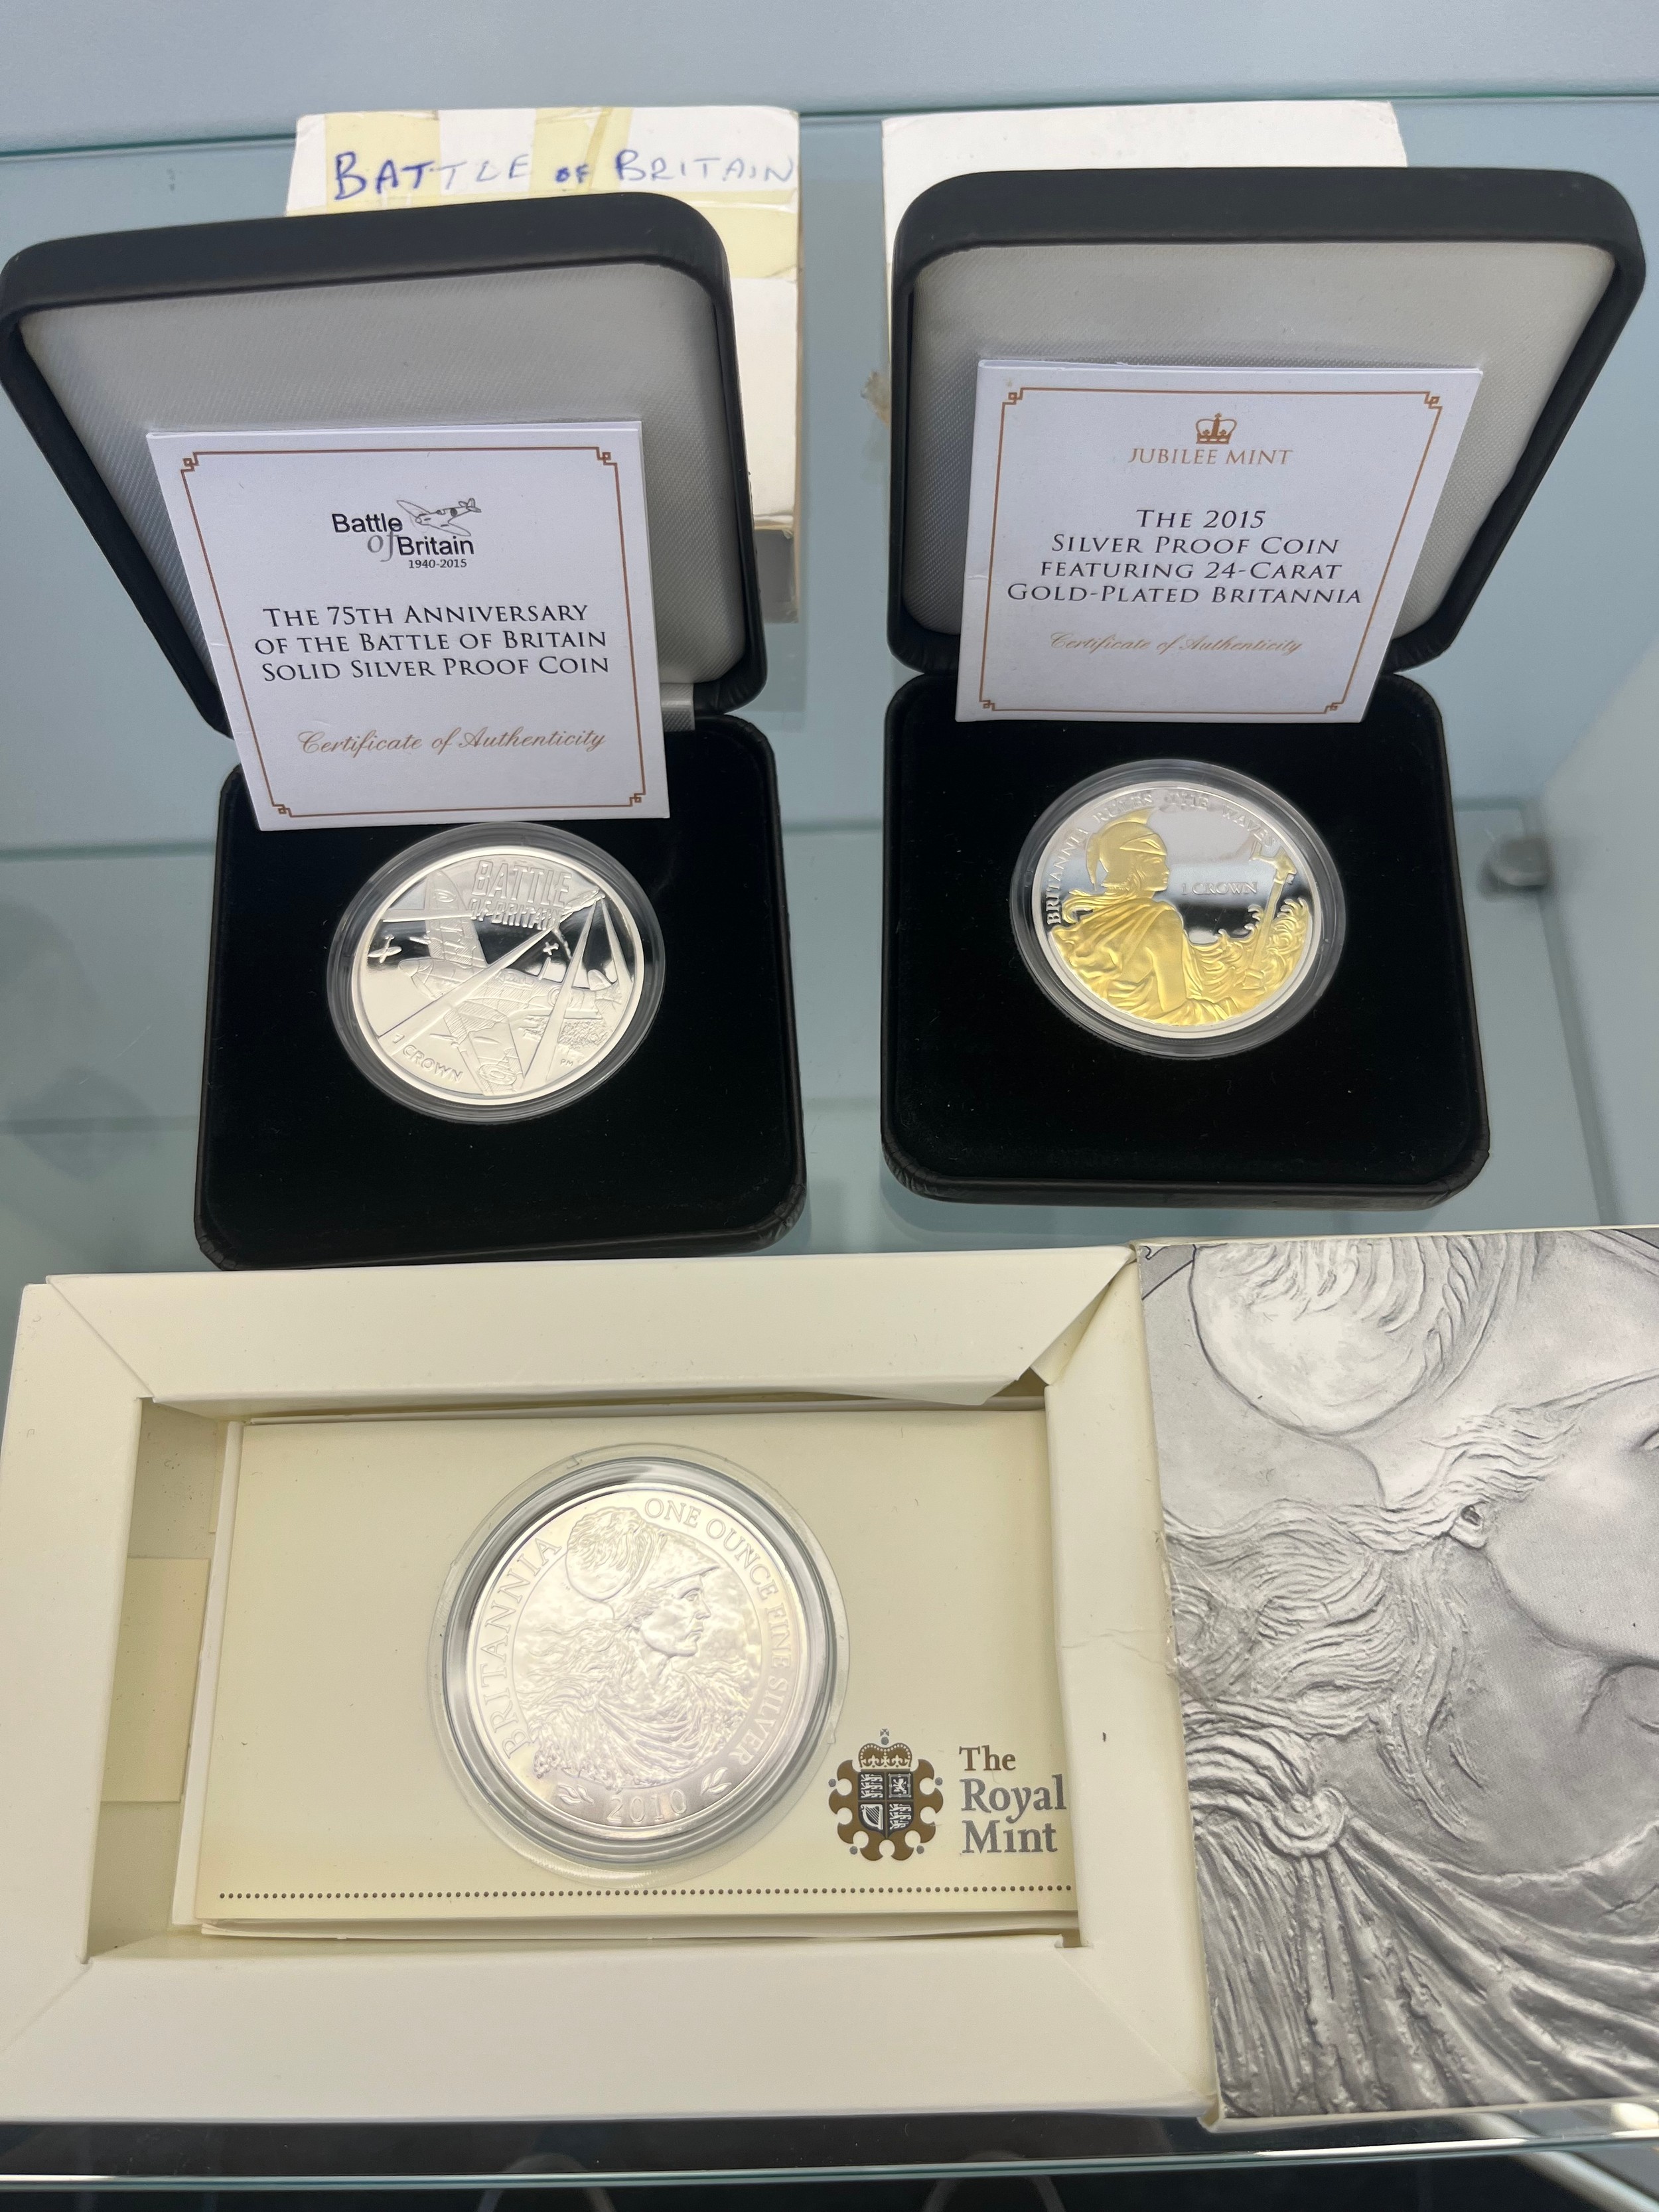 Three silver mint coins; The Royal Mint 'Britannia' 2010 £2 silver bullion coin with box, Two